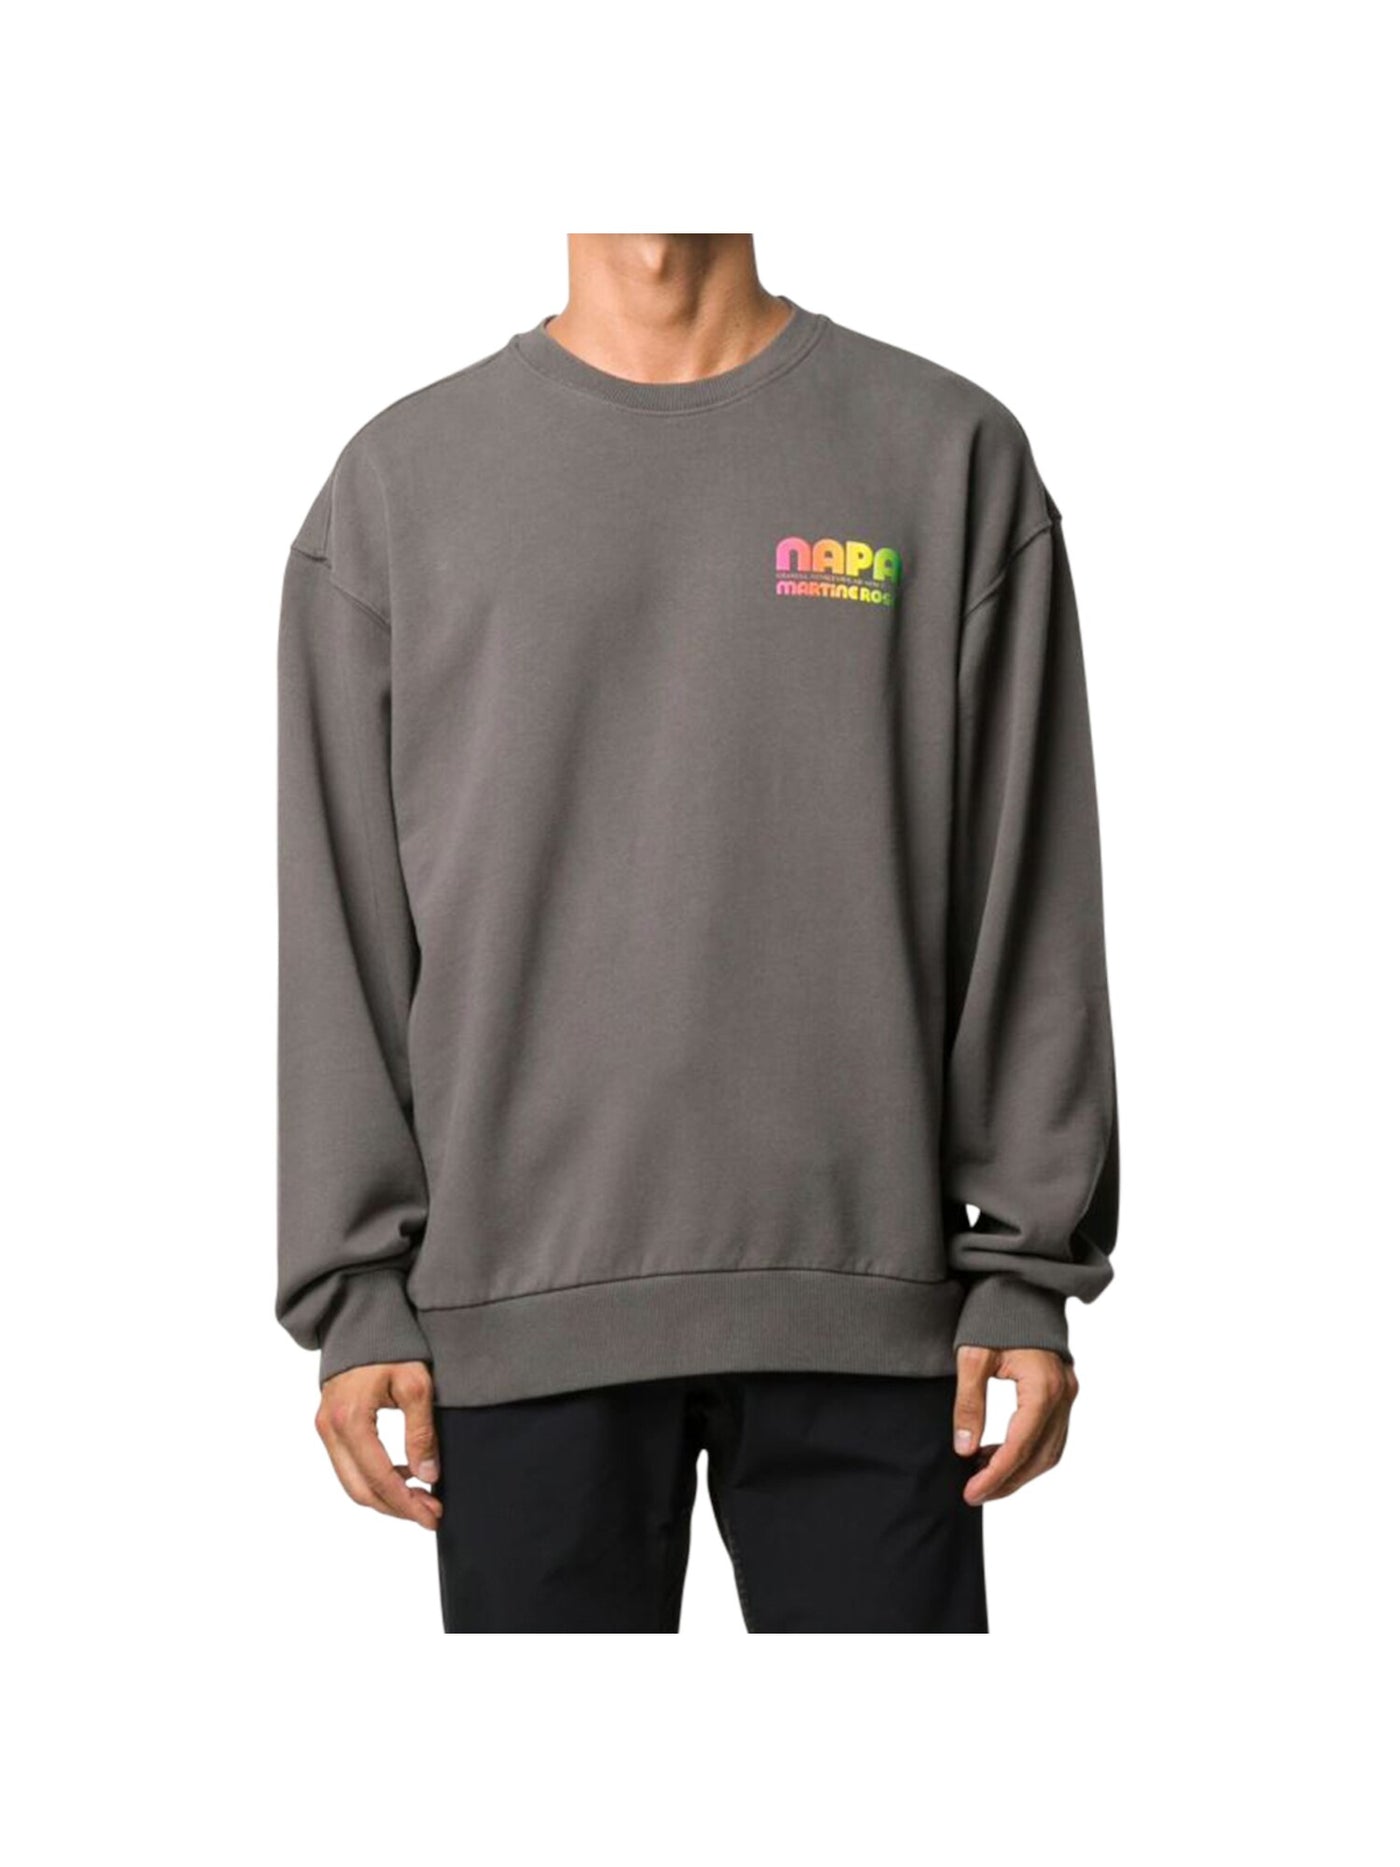 NAPA IJRI Mens Gray Printed Long Sleeve Crew Neck Classic Fit Sweatshirt M